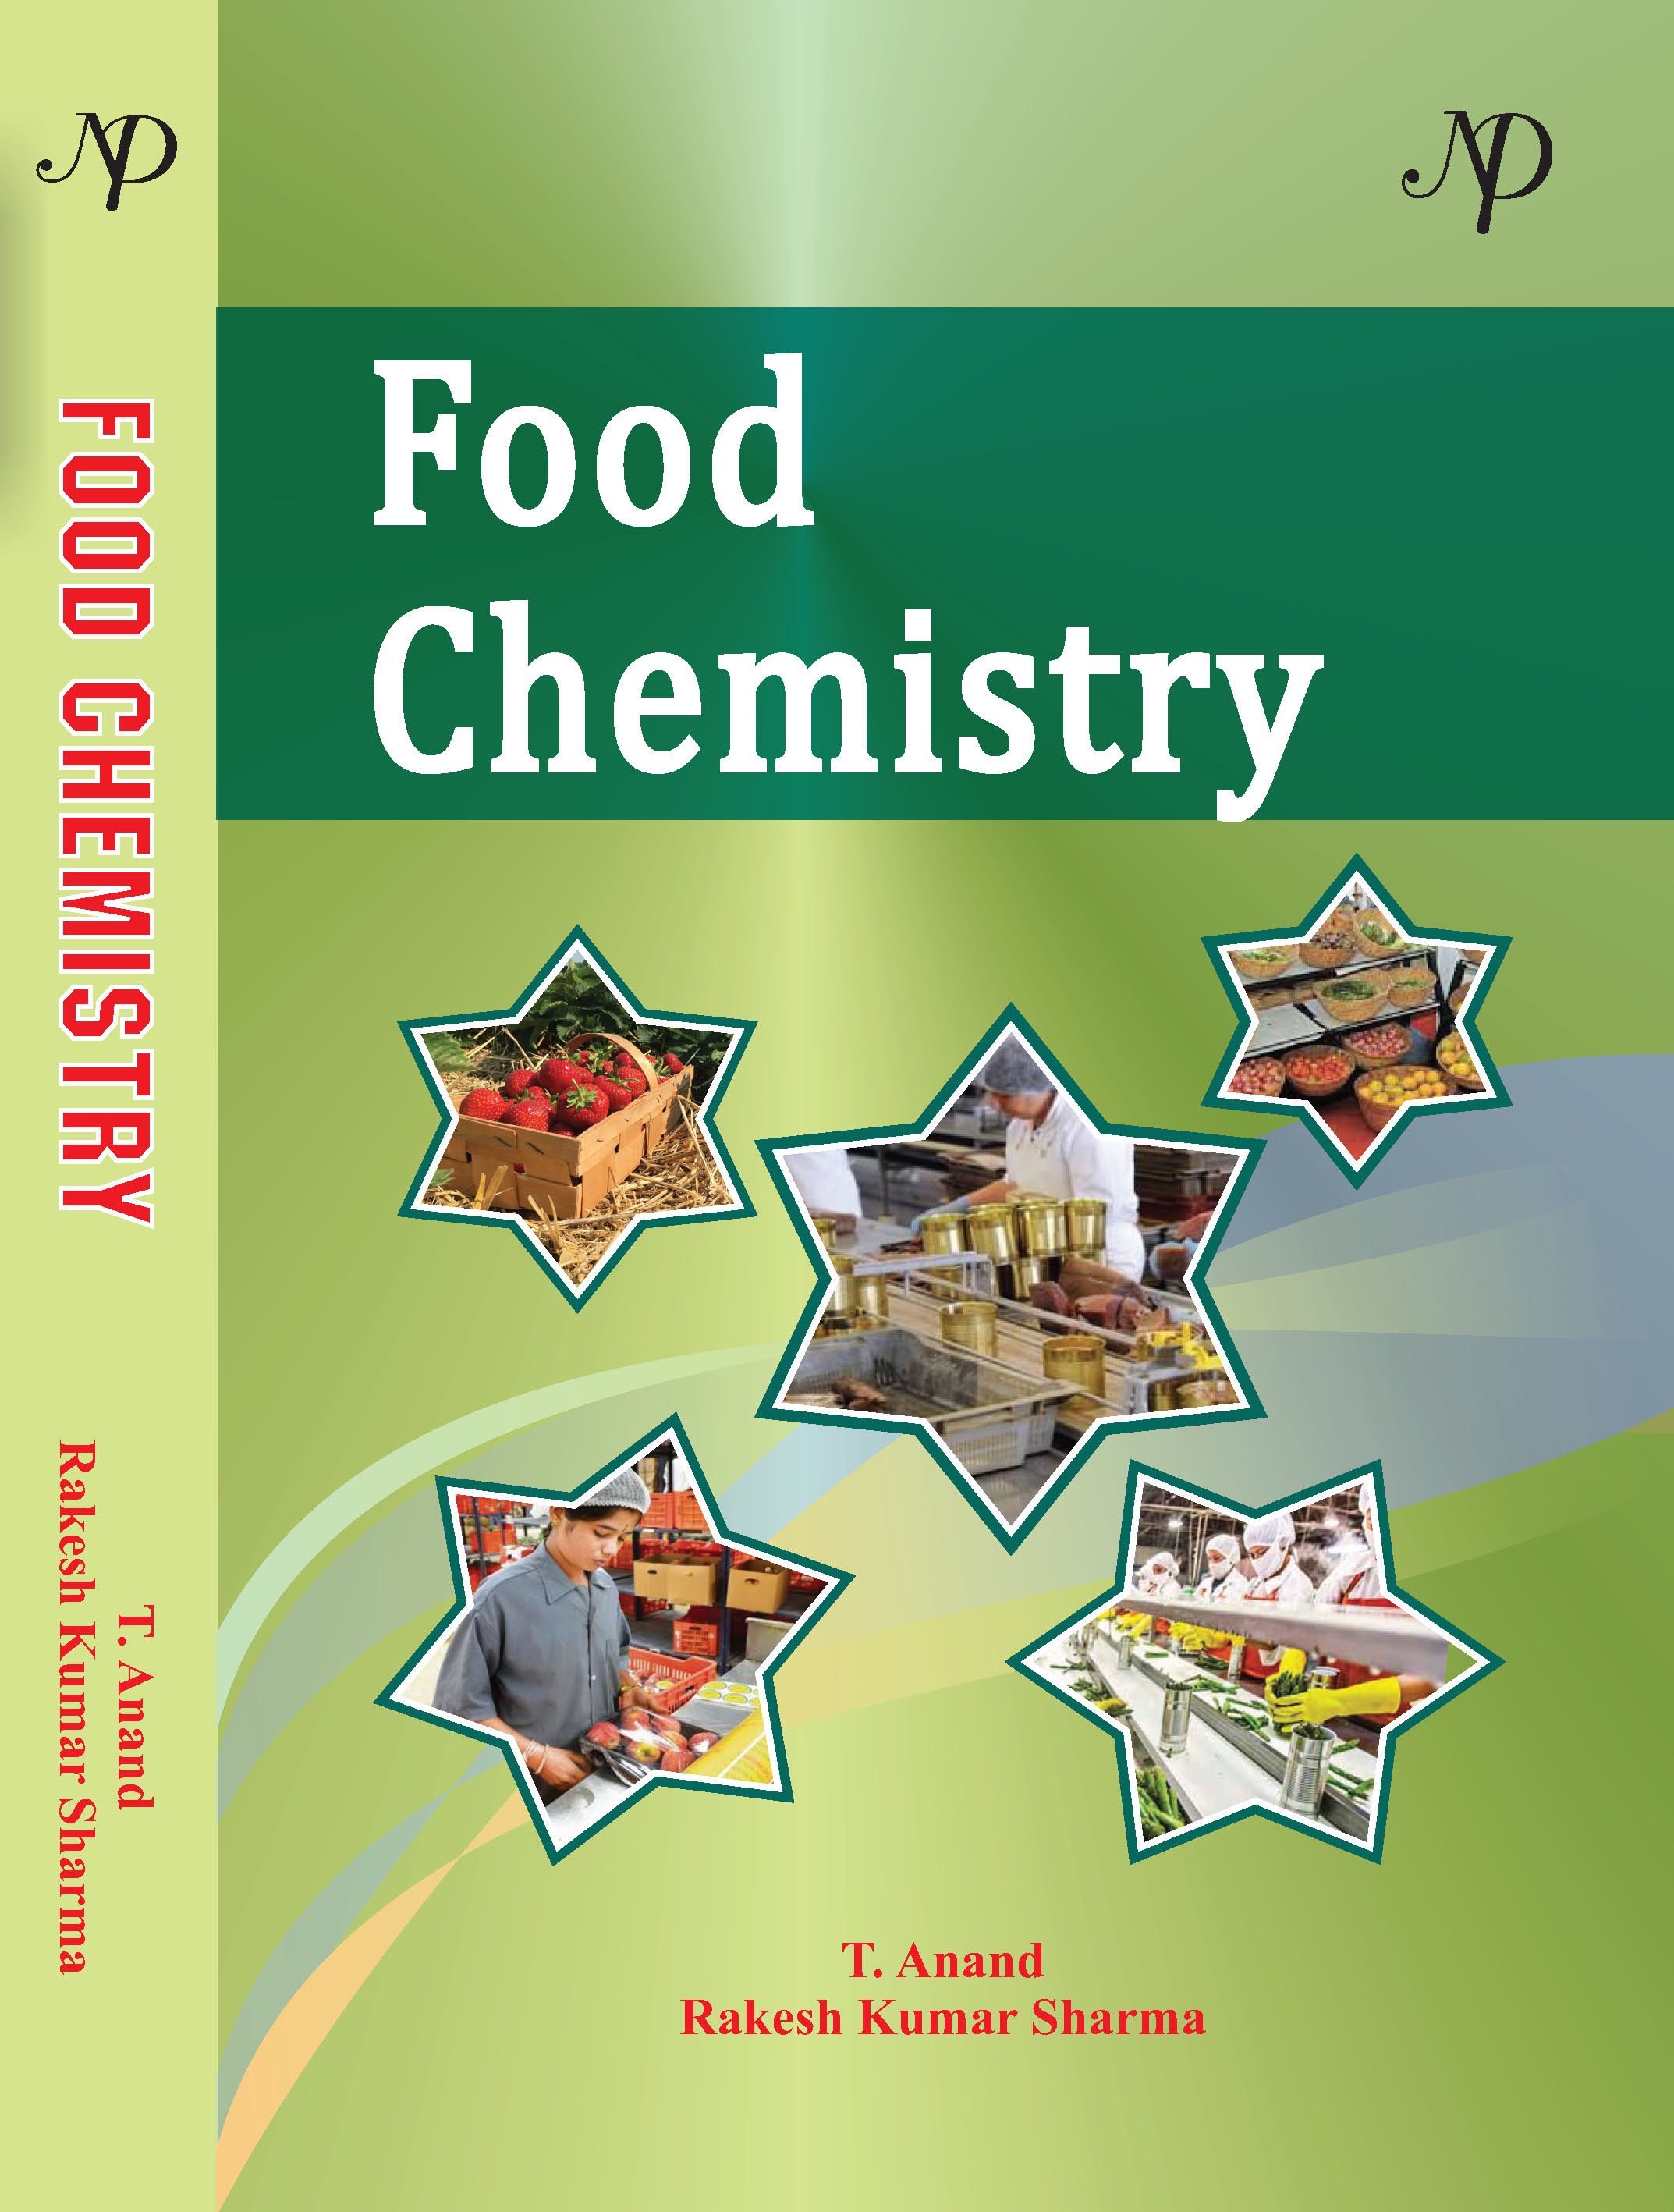 Food chemistry cover HB.jpg